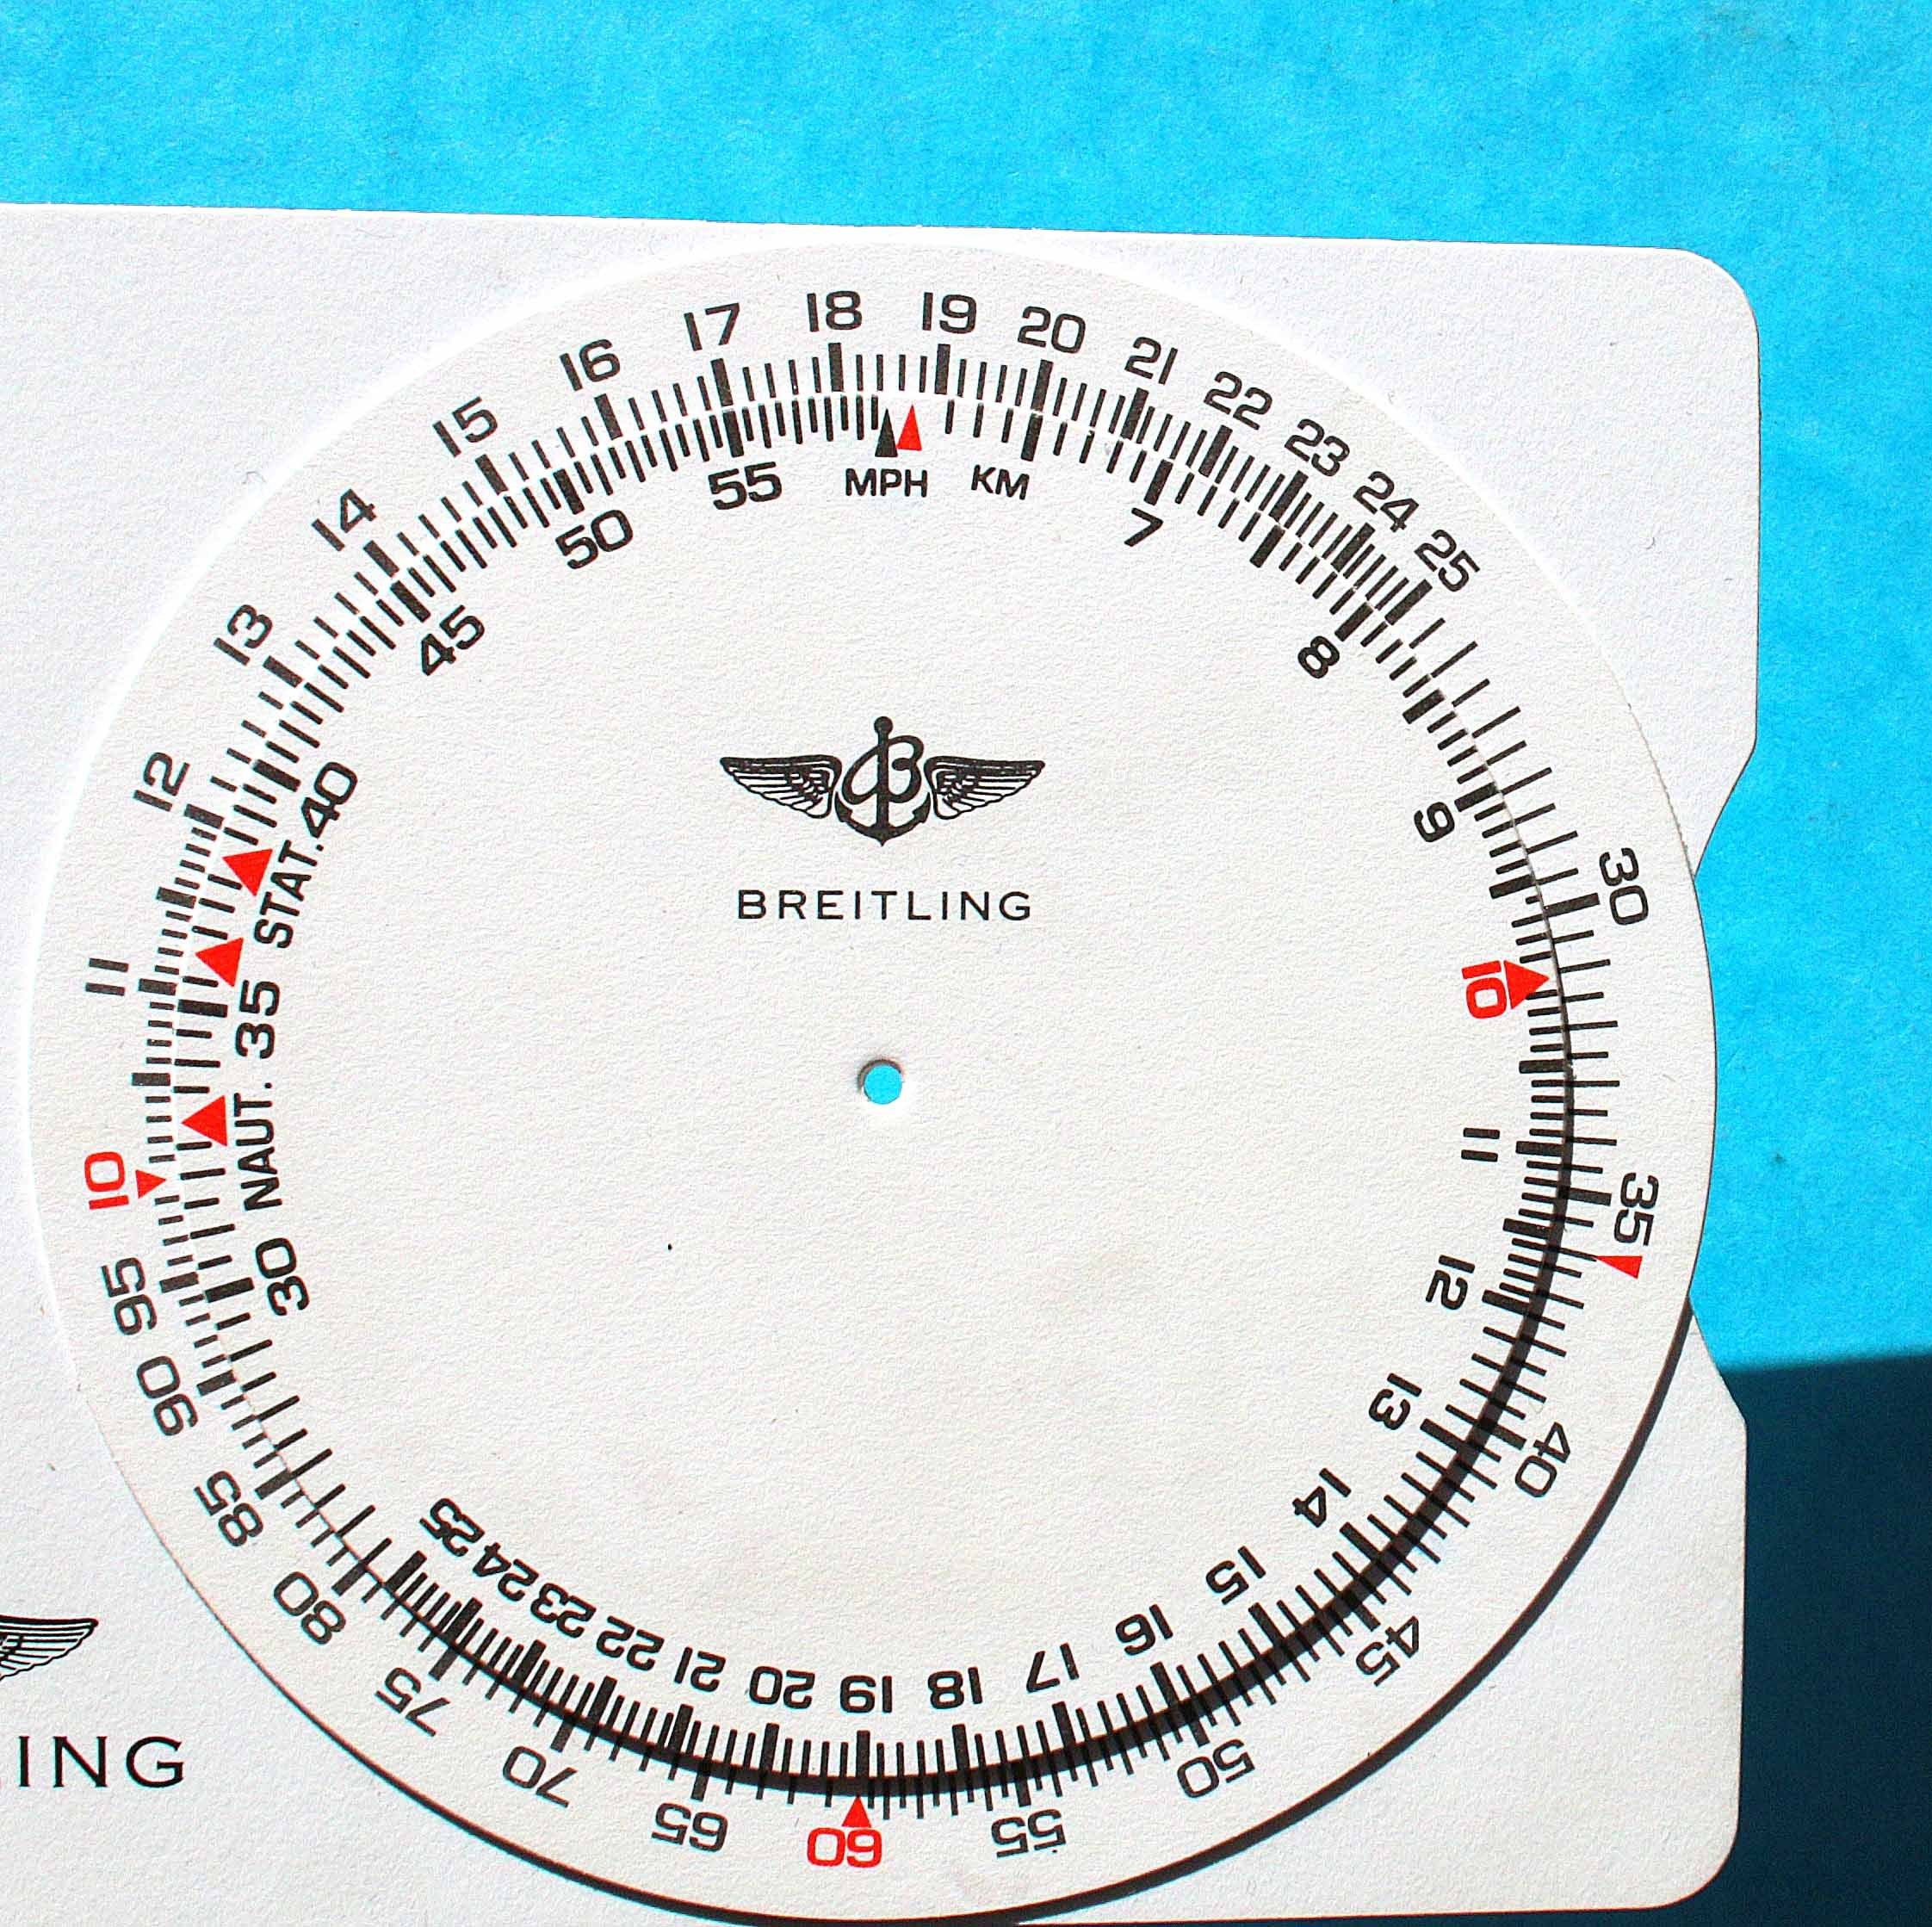 Breitling instruction manual